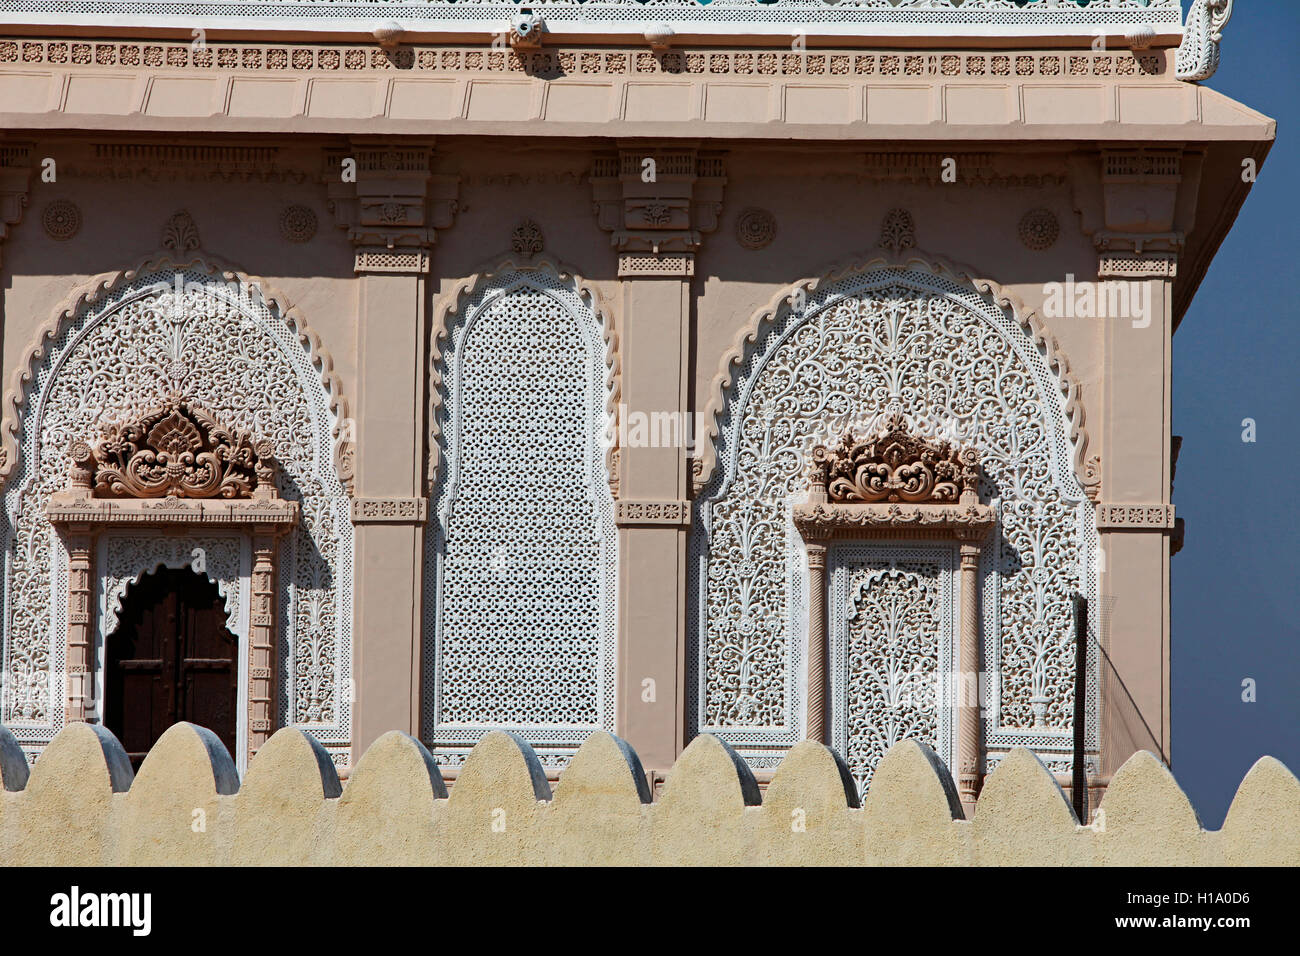 Windows talladas, Abu tarab dargah, lakhpat fort, Gujarat, India. lakhpat era conocido como basta bander. Foto de stock